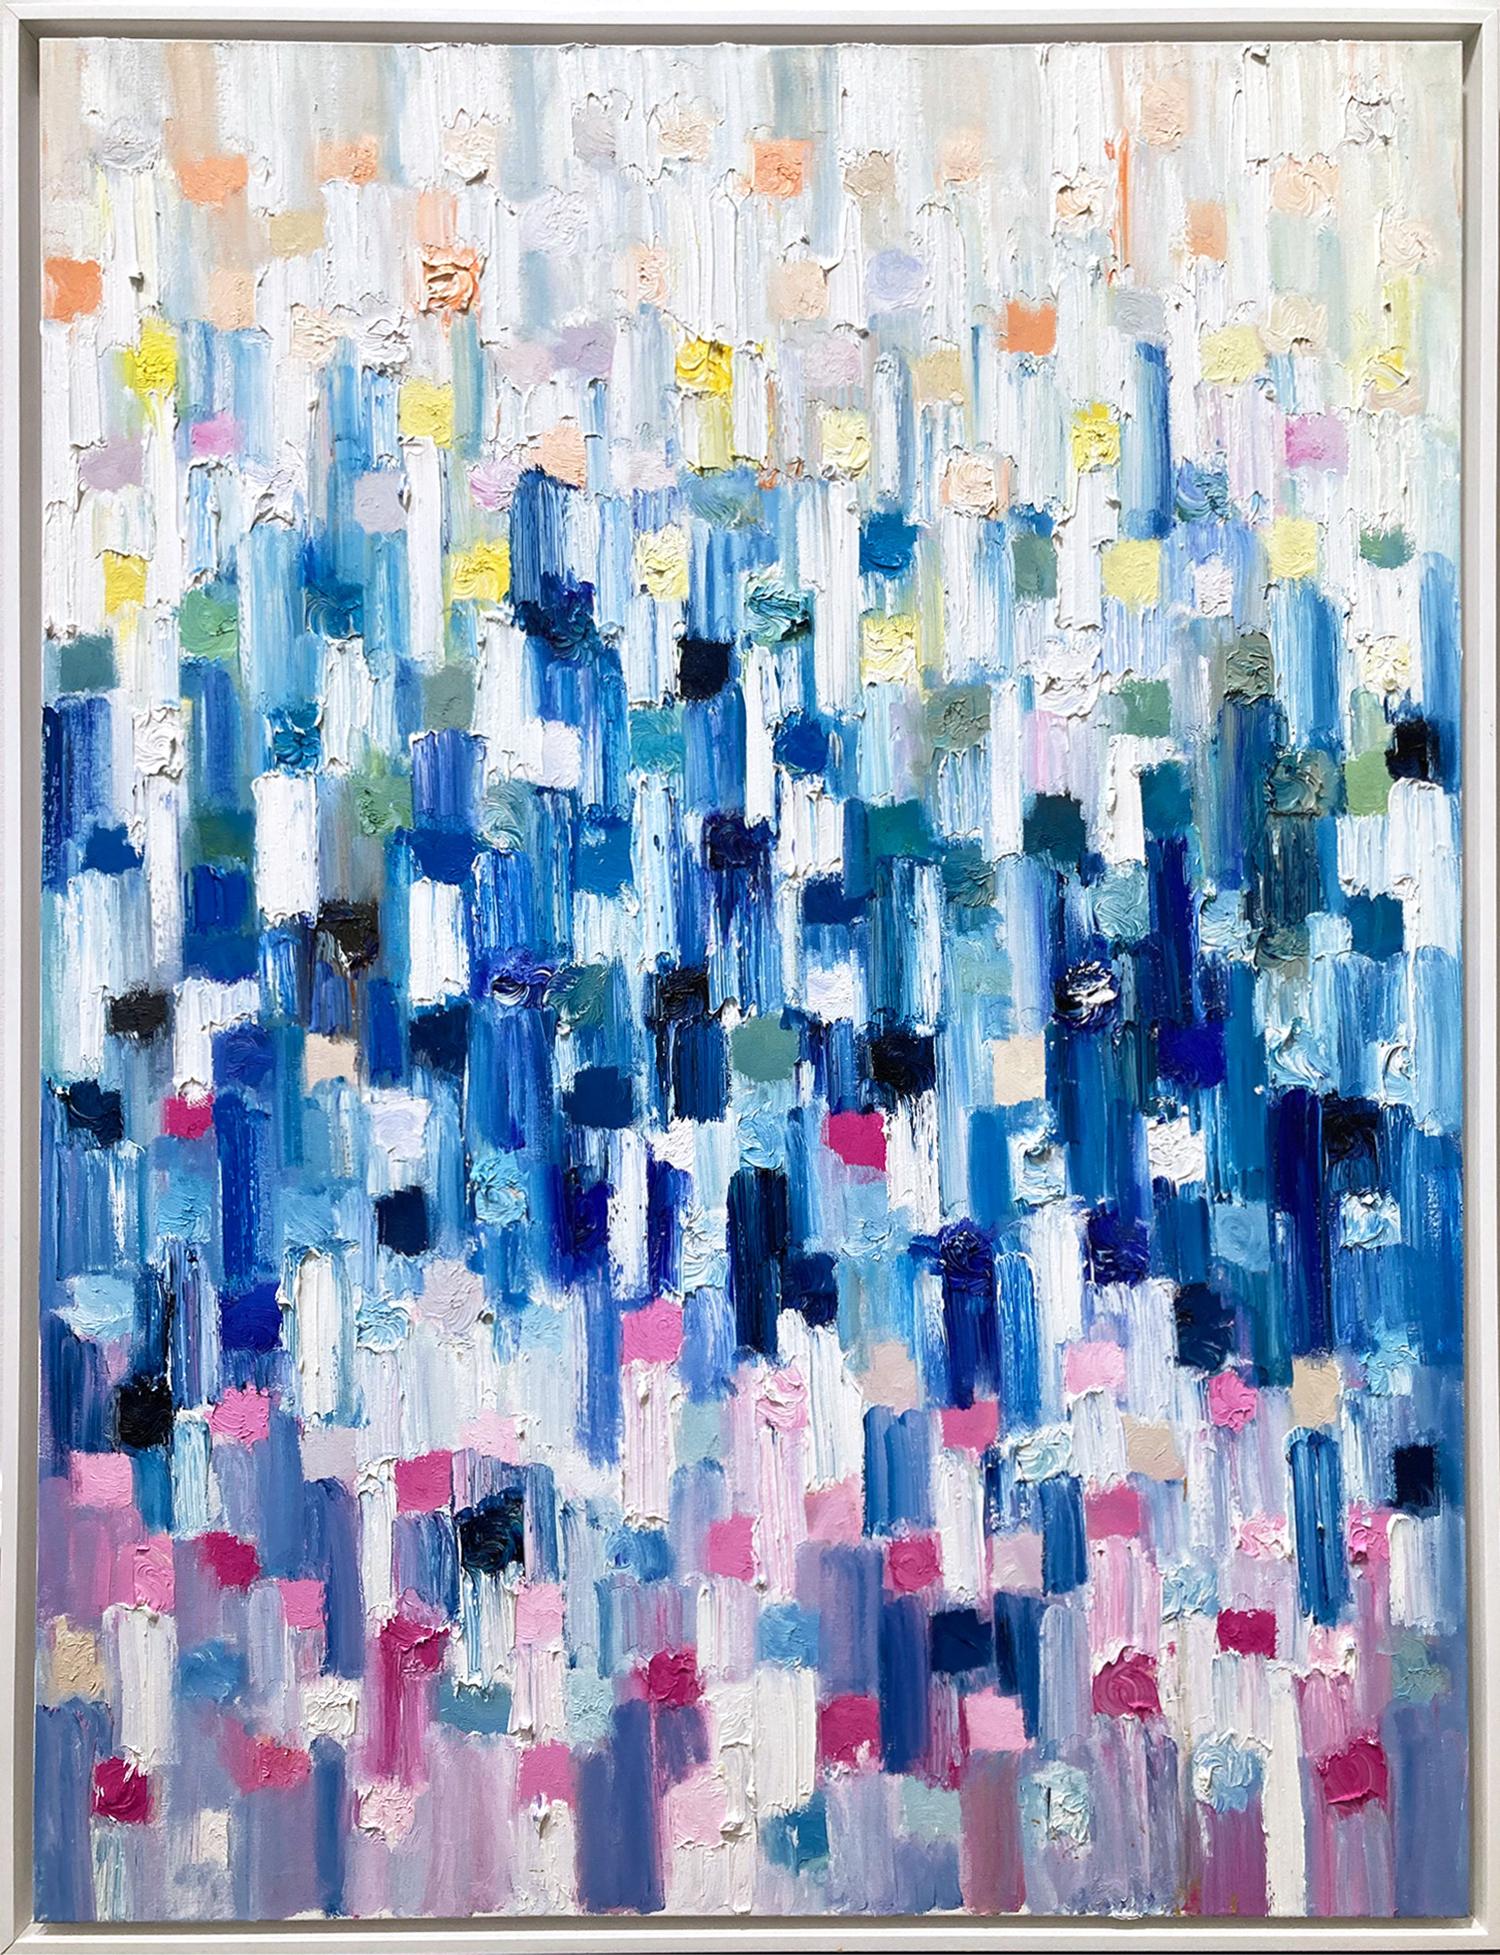 Abstract Painting Cindy Shaoul - "Dripping Dots - Savanah" Peinture à l'huile contemporaine multicolore sur toile